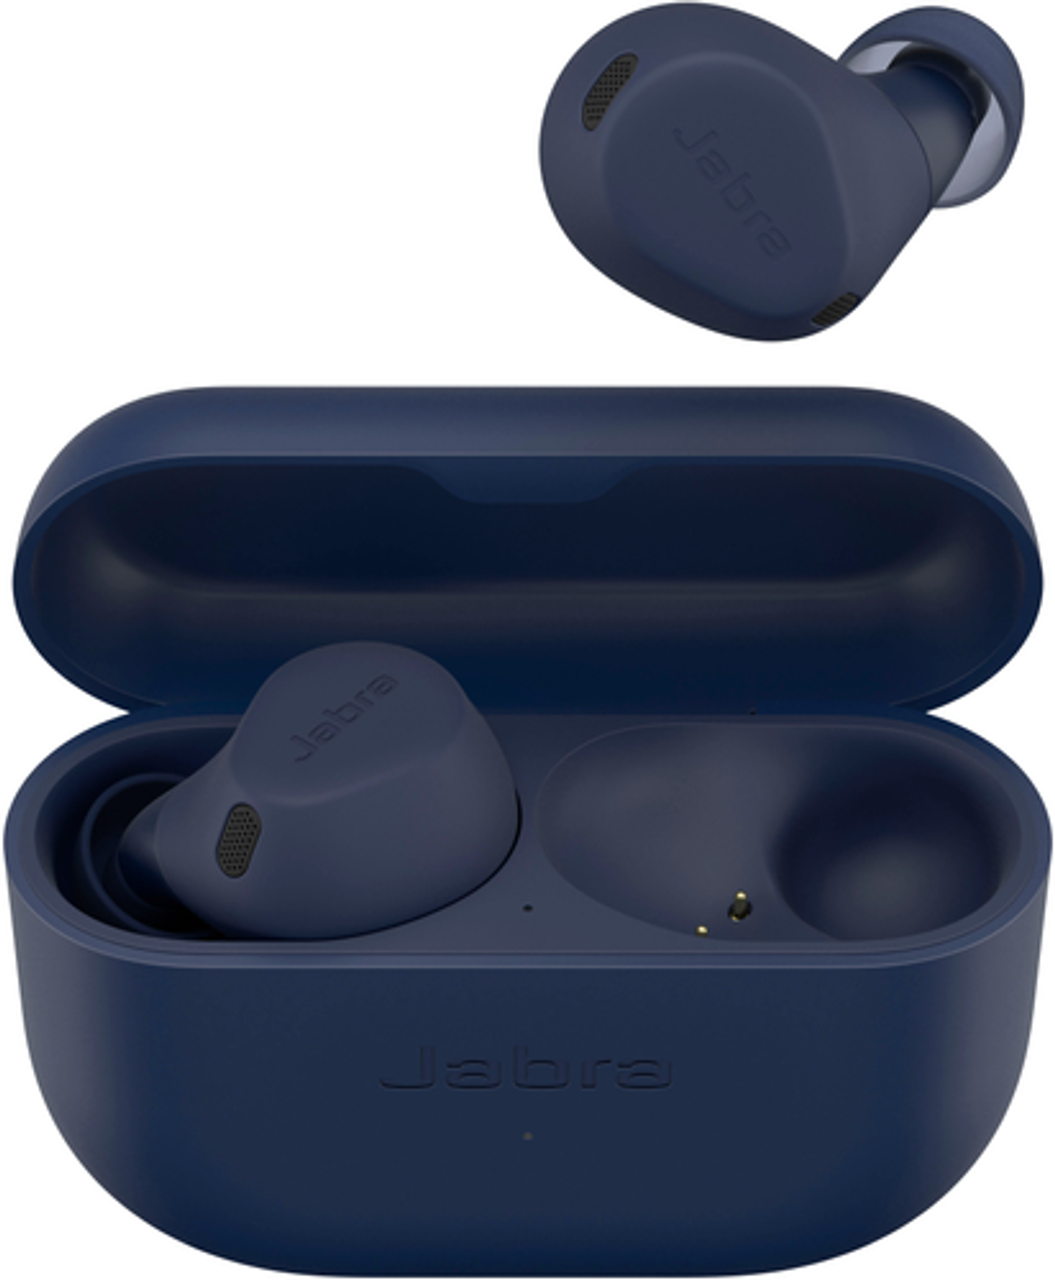 Jabra - Elite 8 Active In-ear Headphone with Military Grade Durability - Navy